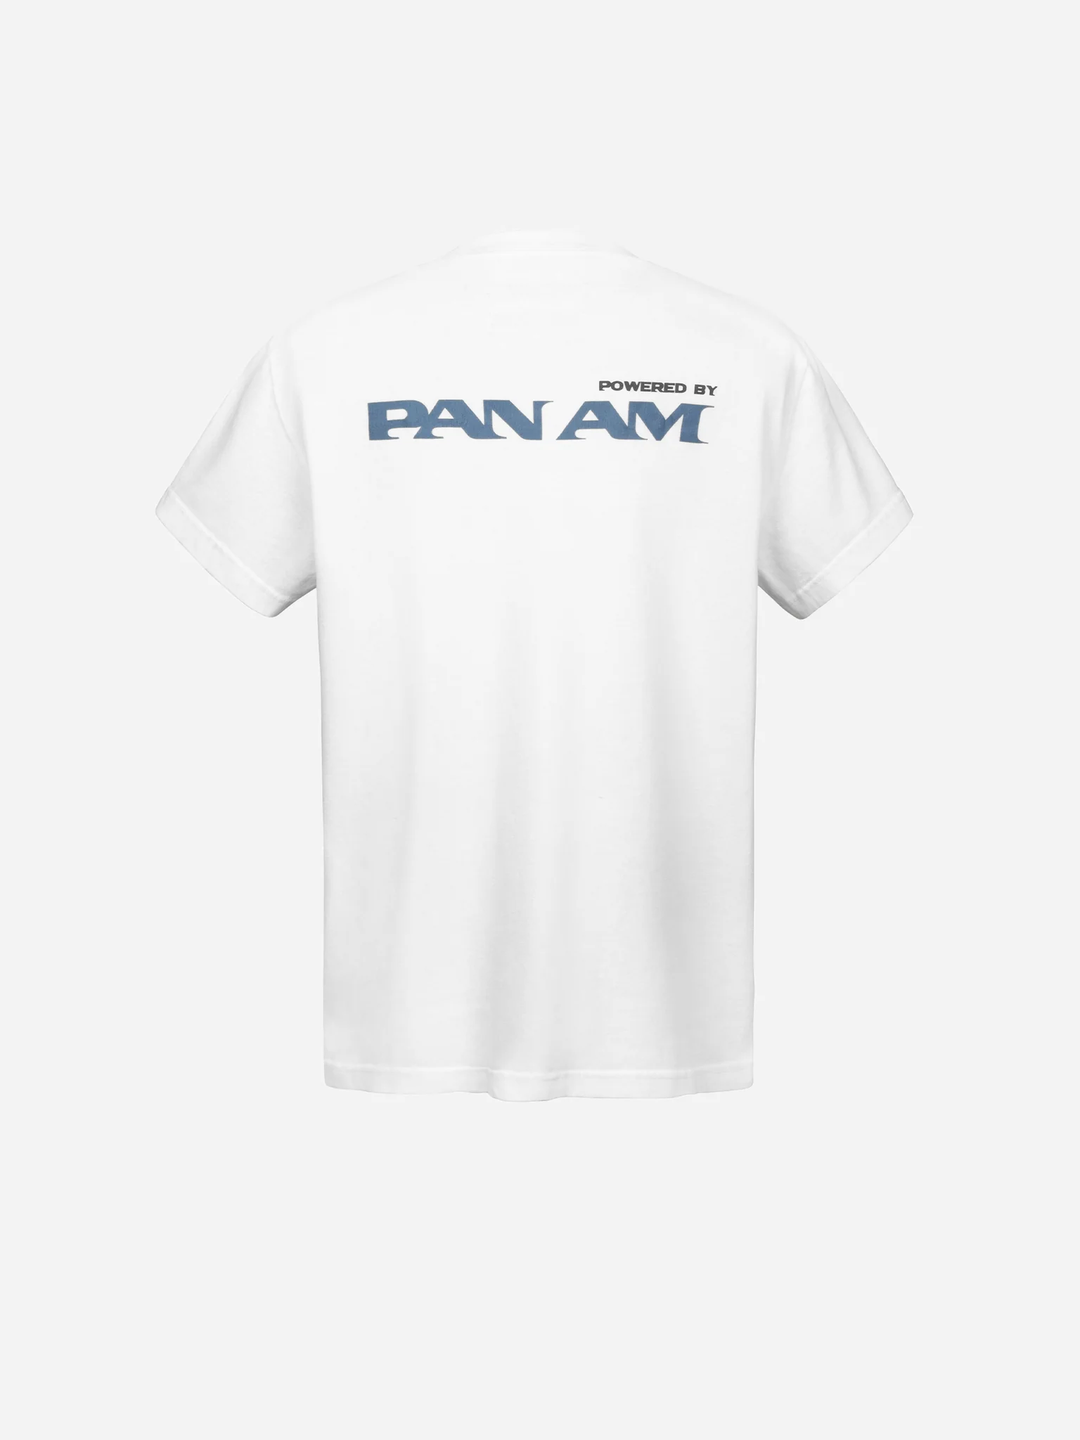 Pan Am X C2H4  Airline T-Shirt